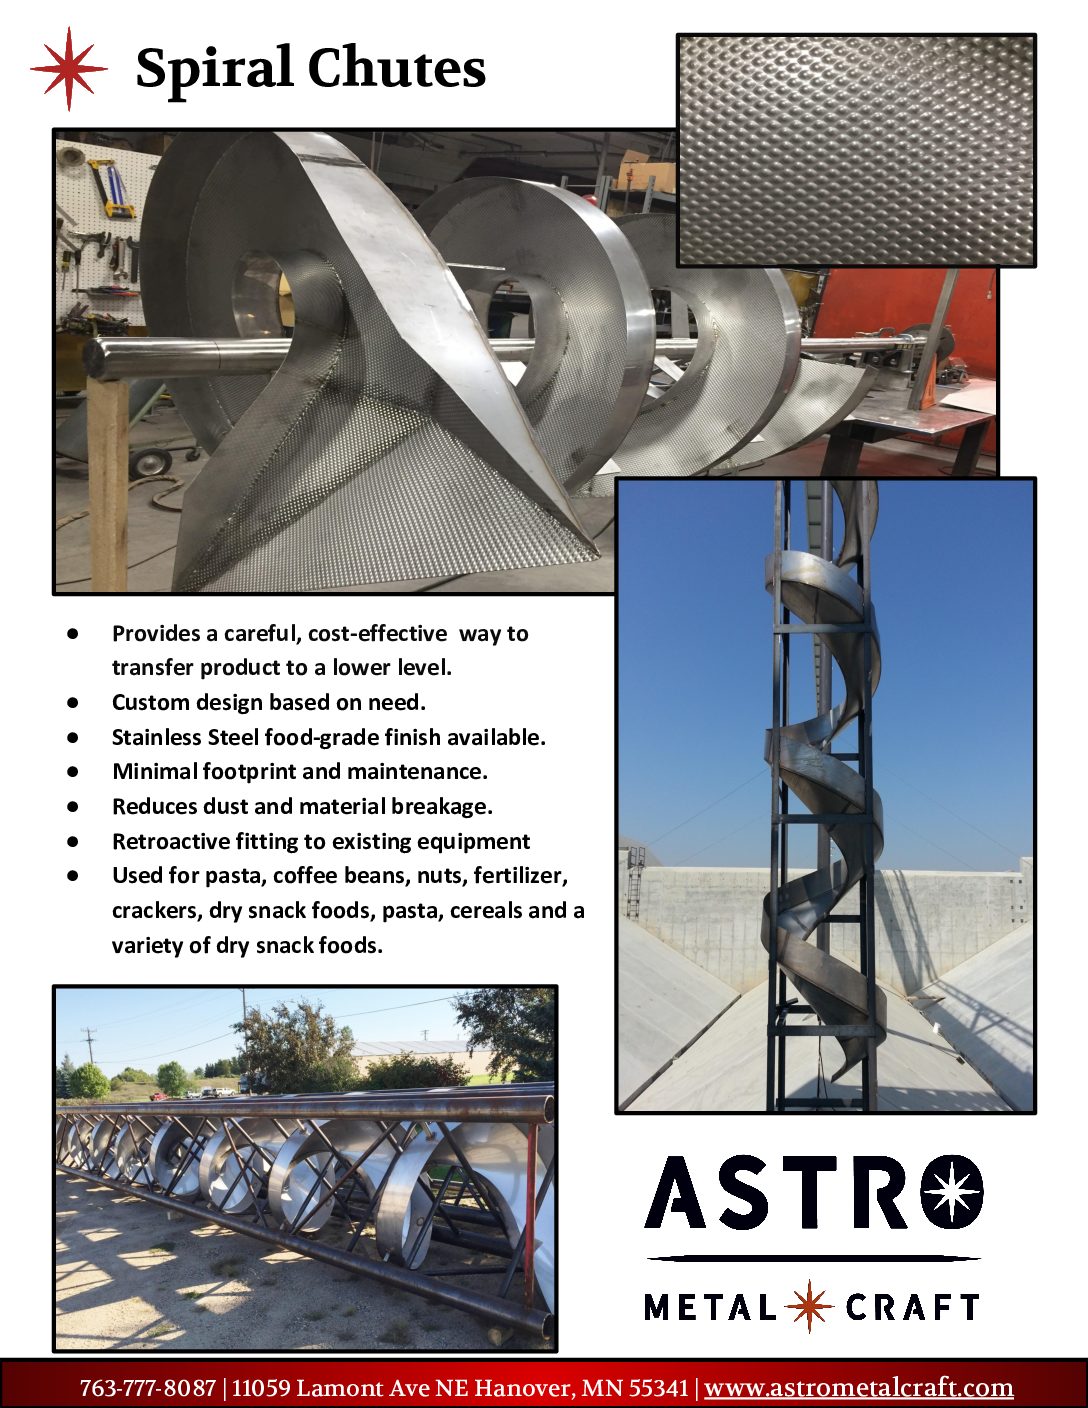 Astro Metal Craft – Spiral Chutes Line Card